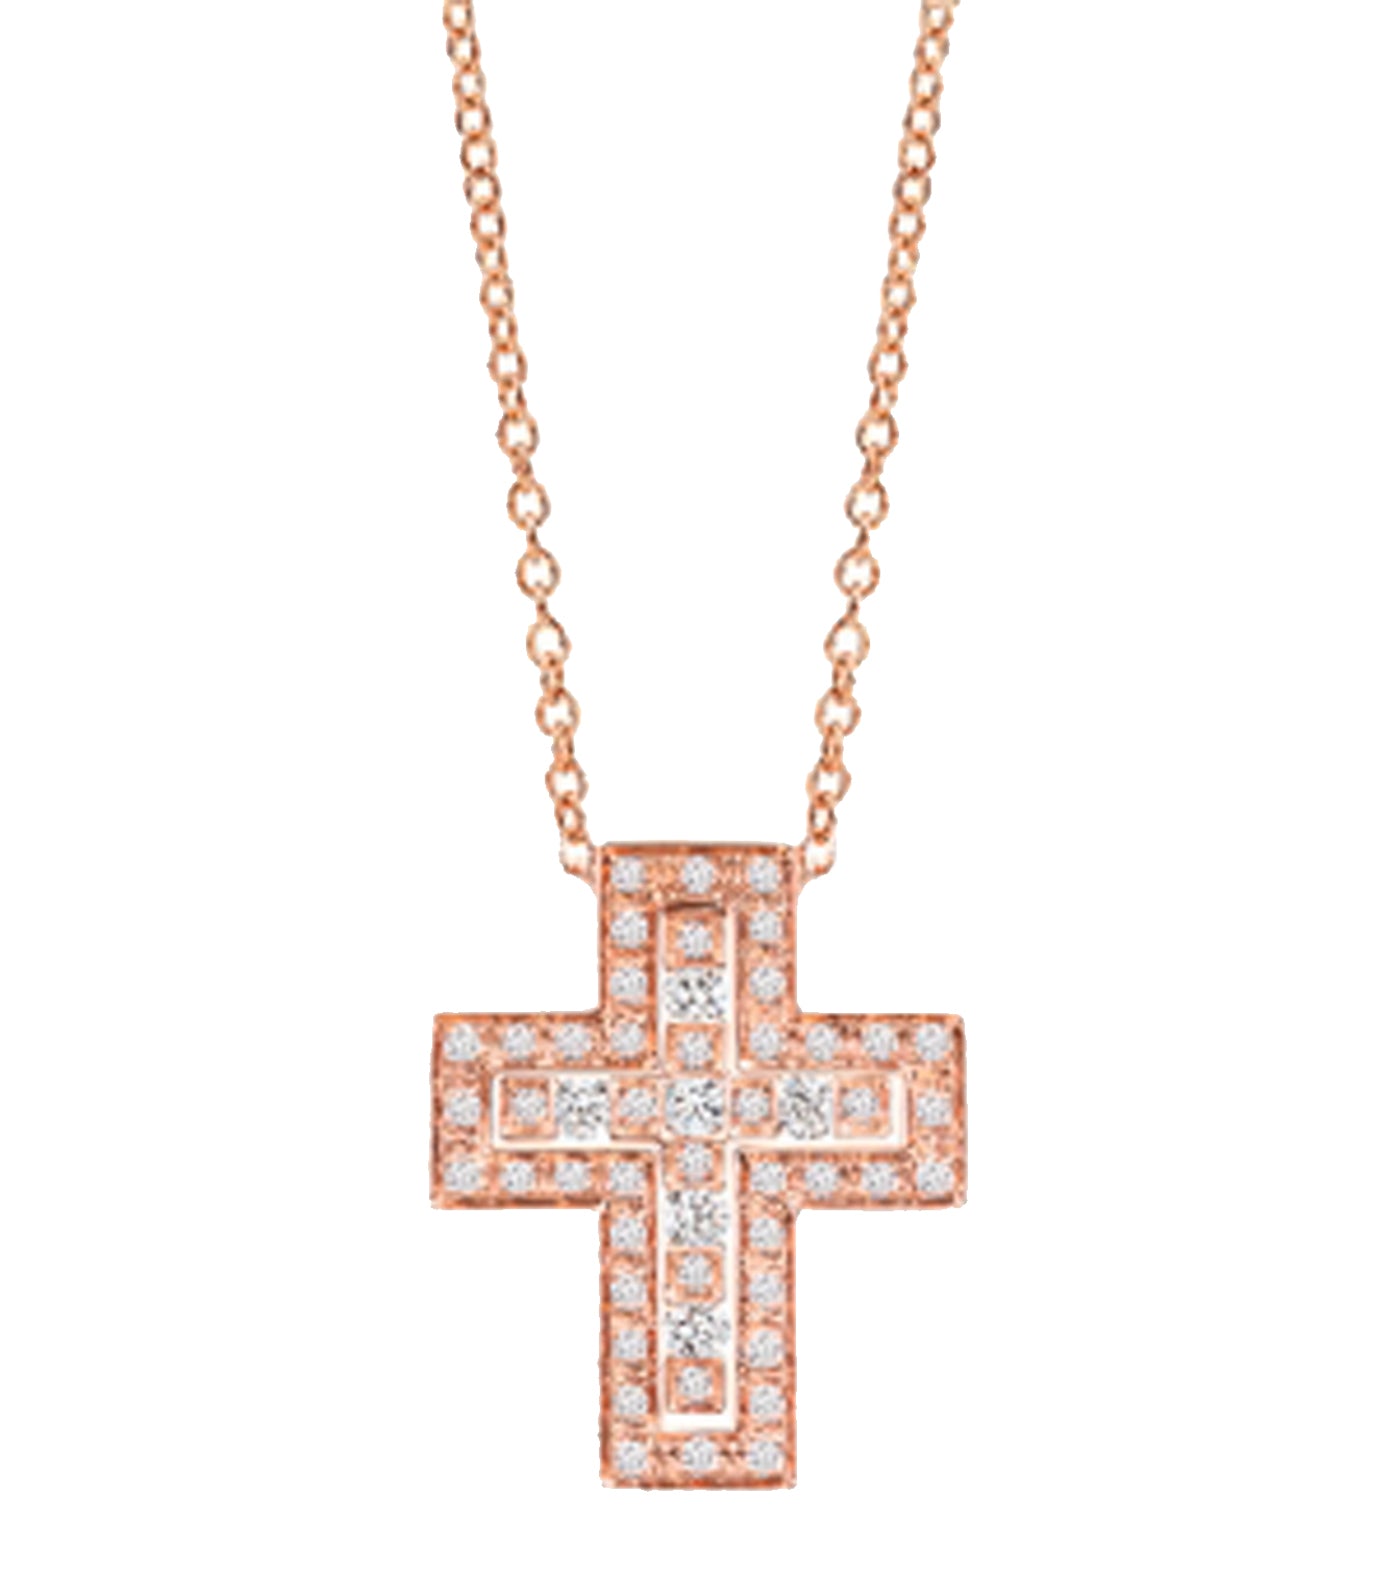 Belle Epoque 18K Rose Gold and Diamonds Cross Necklace 50cm